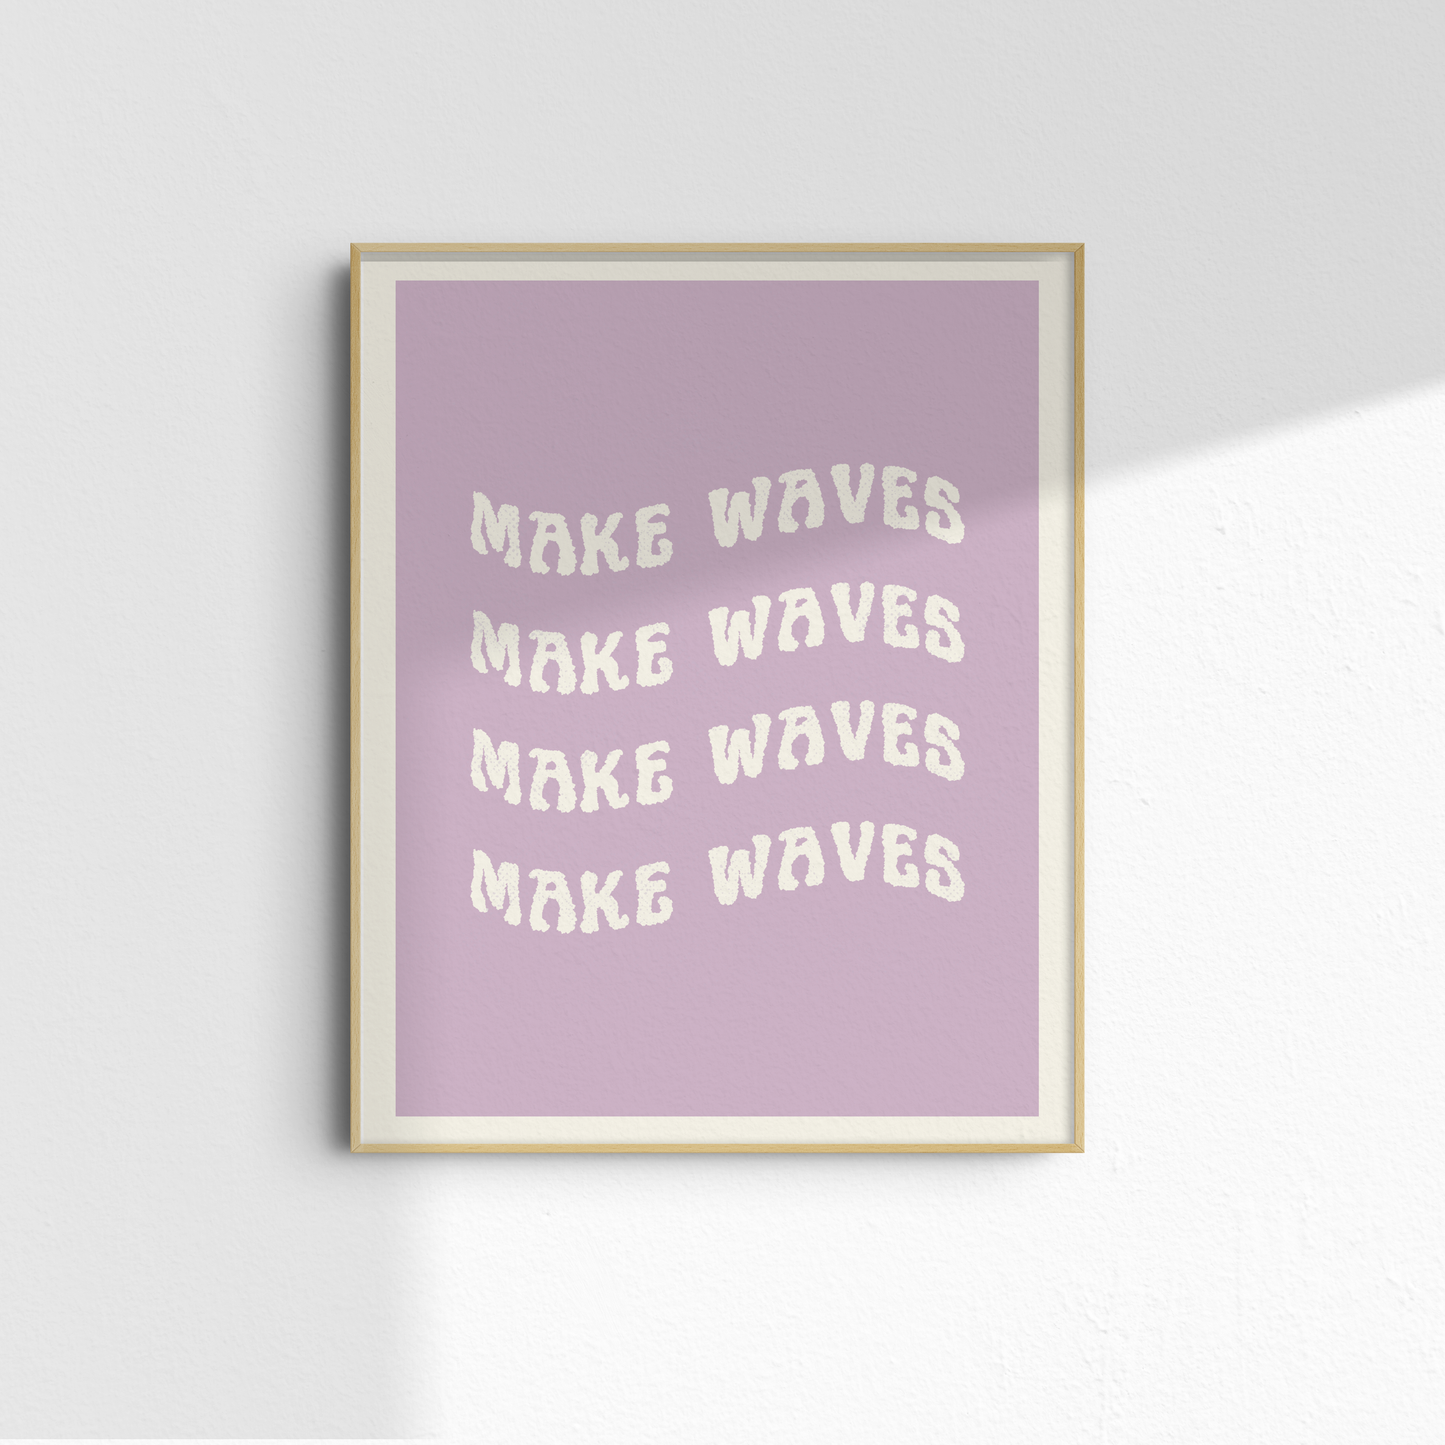 Make waves - motivational art print